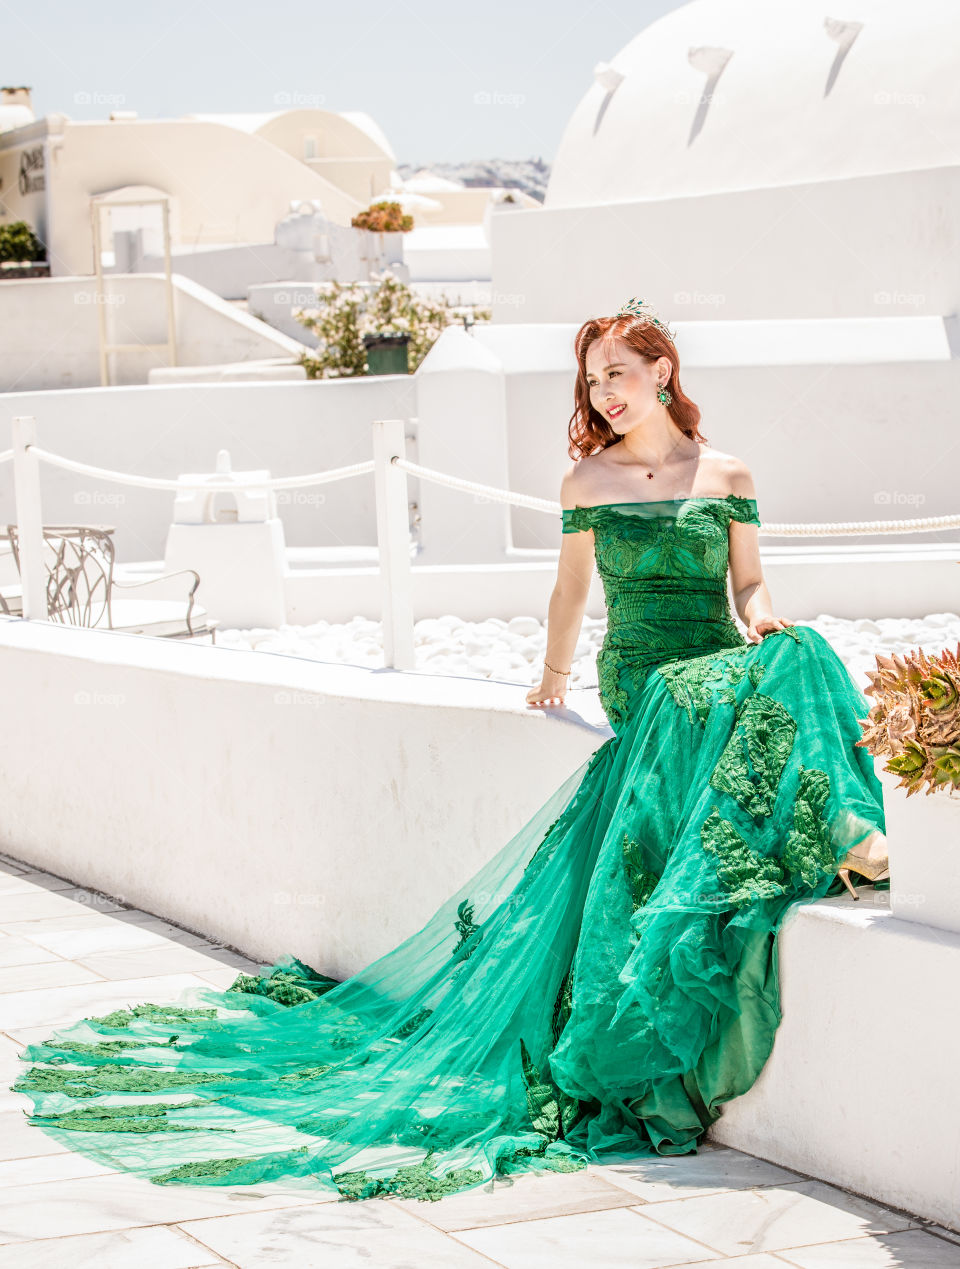 Beautiful Bride On Green Wedding Dress On Famous Greek Island Santorini
